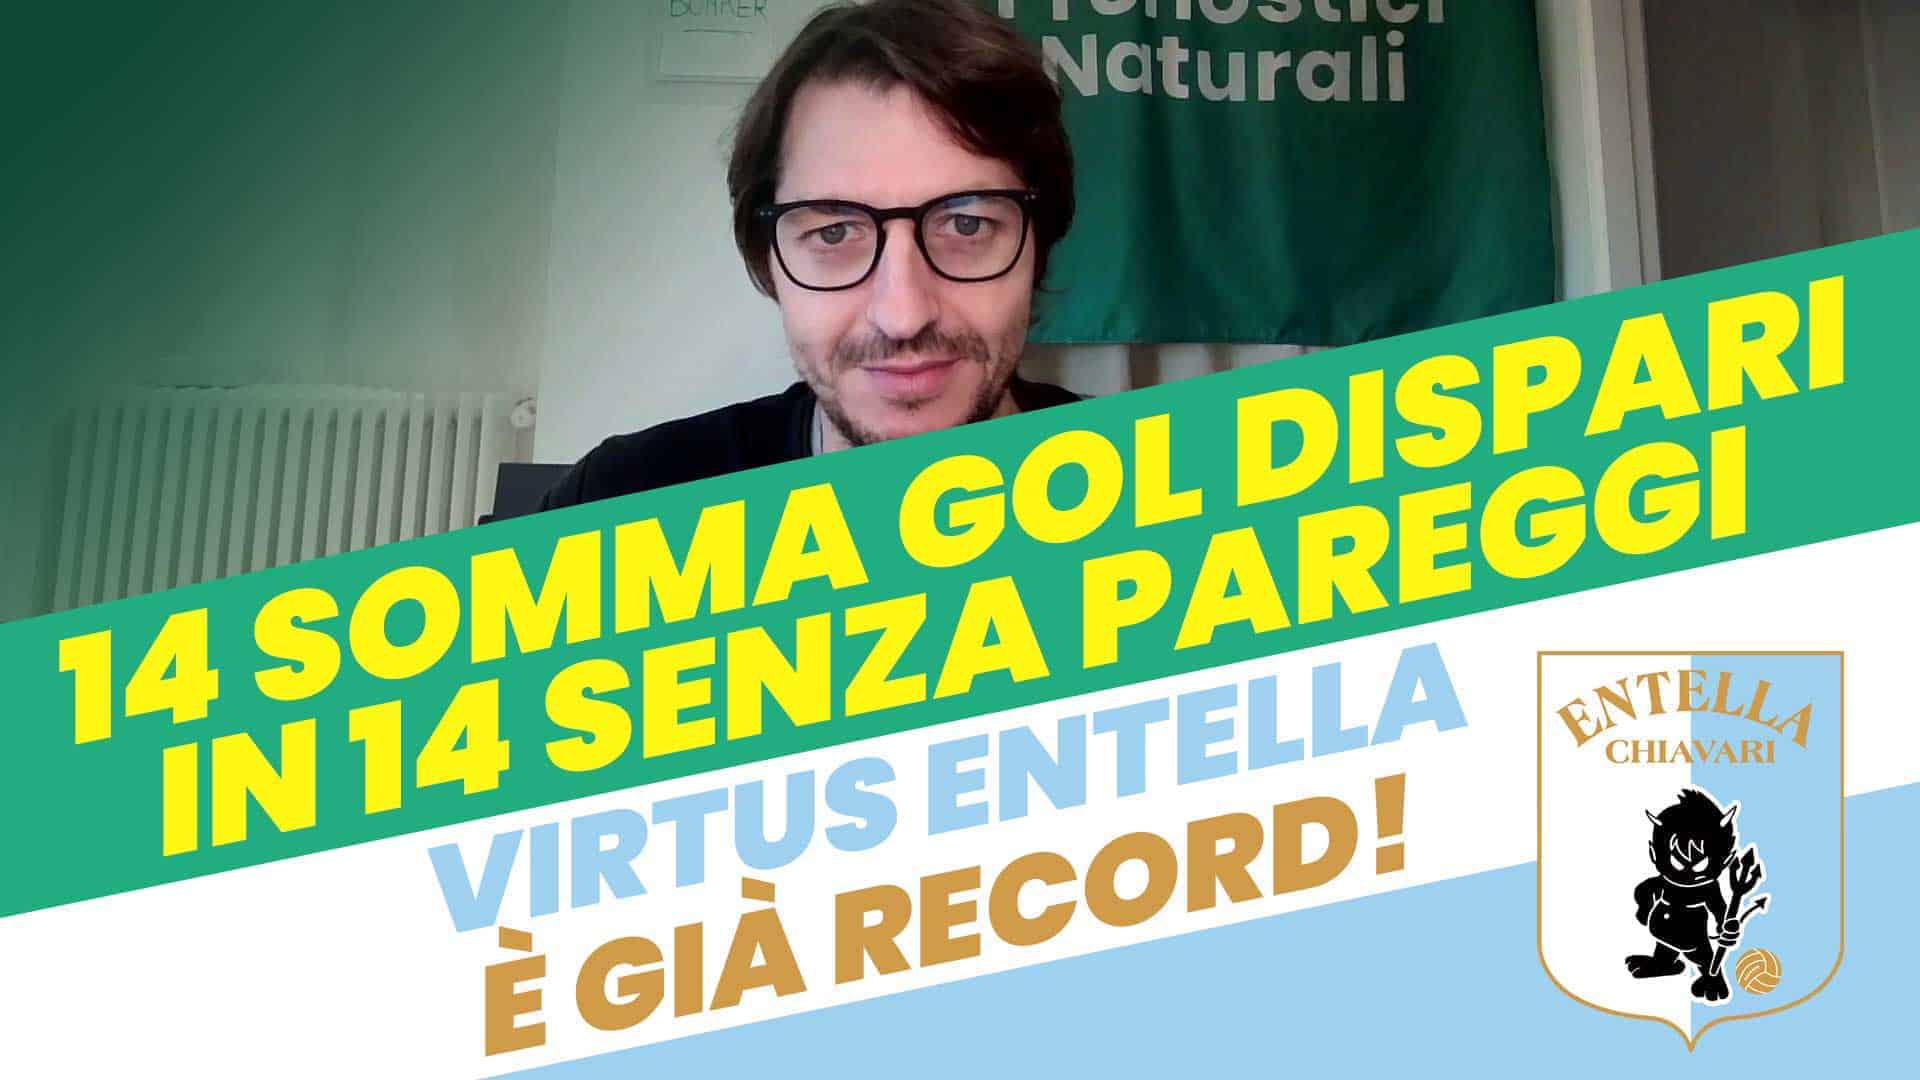 Pronostici Naturali Video Analisi Scommesse Betting Calcio Virtus Entella Somma Gol Dispari Recordo11 Febbraio 2021